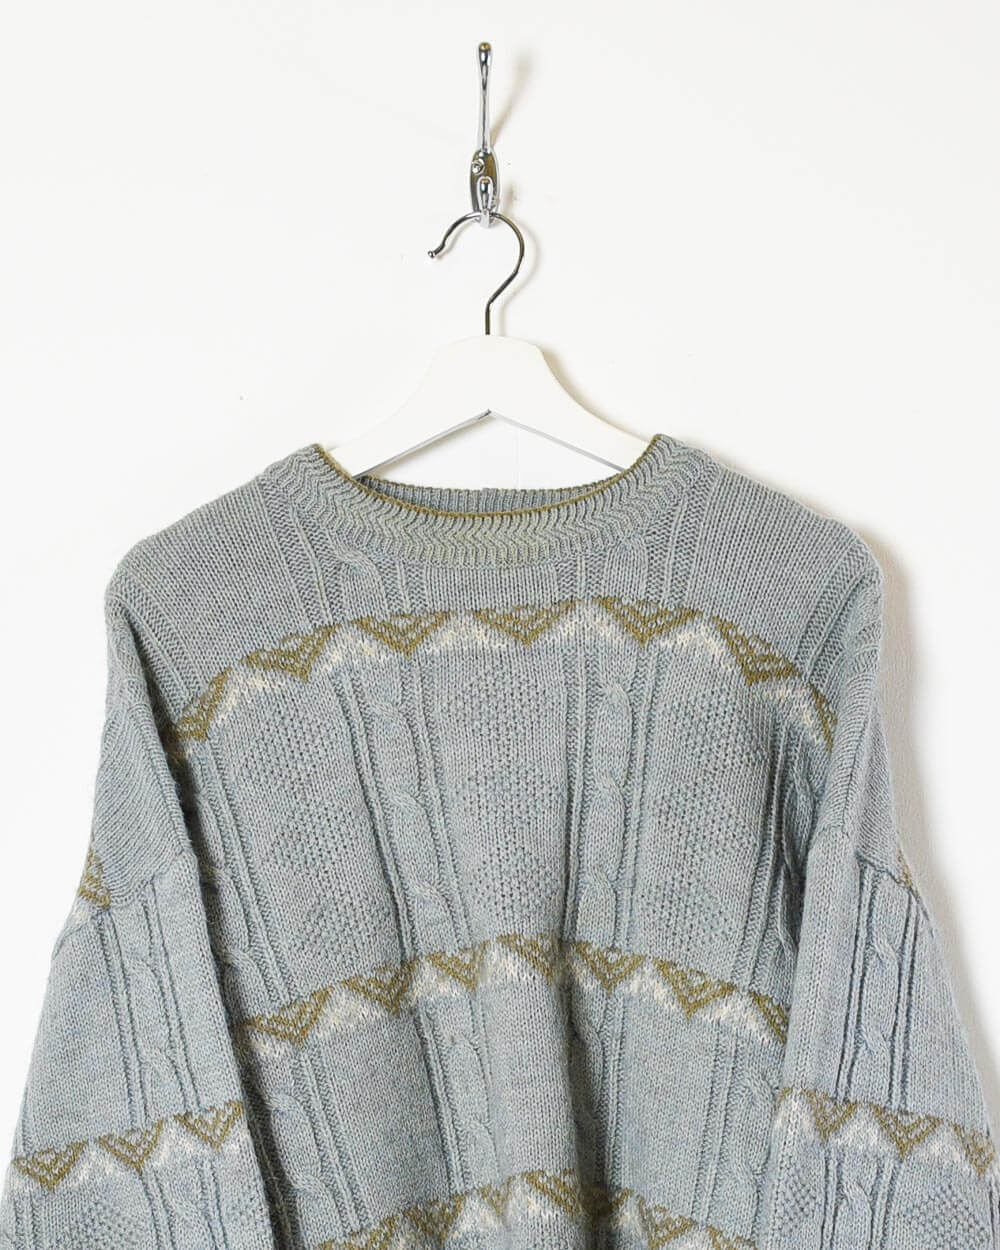 Stone Vintage Knitted Sweatshirt - Small